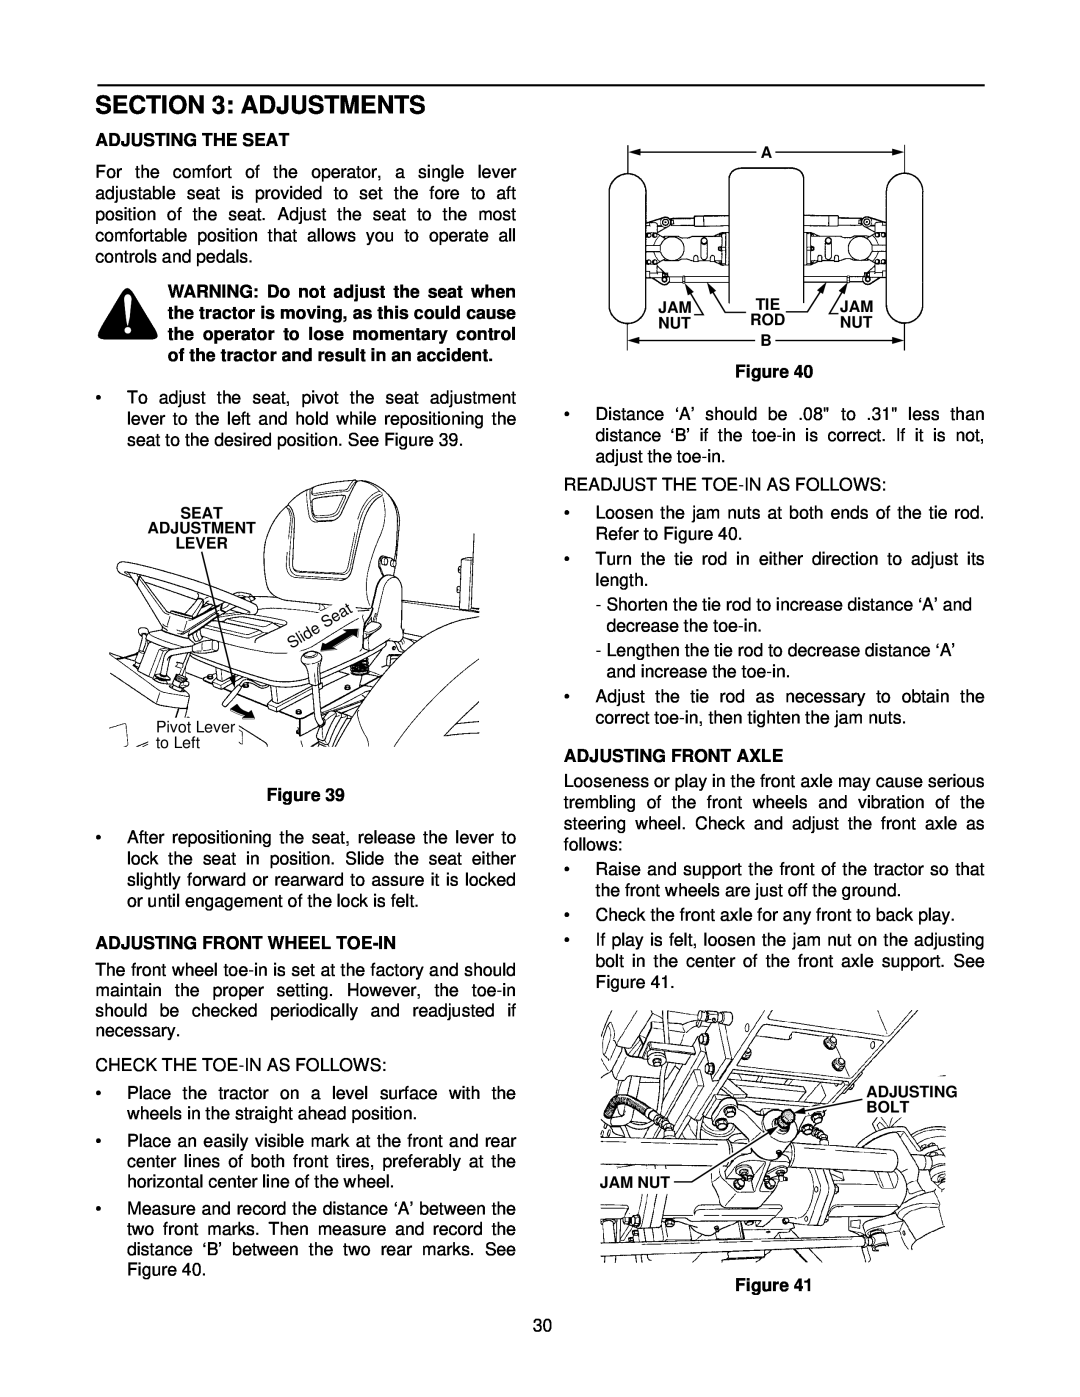 Cub Cadet 8354 manual Adjustments, Adjusting The Seat, Figure, Adjusting Front Wheel Toe-In, Adjusting Front Axle 